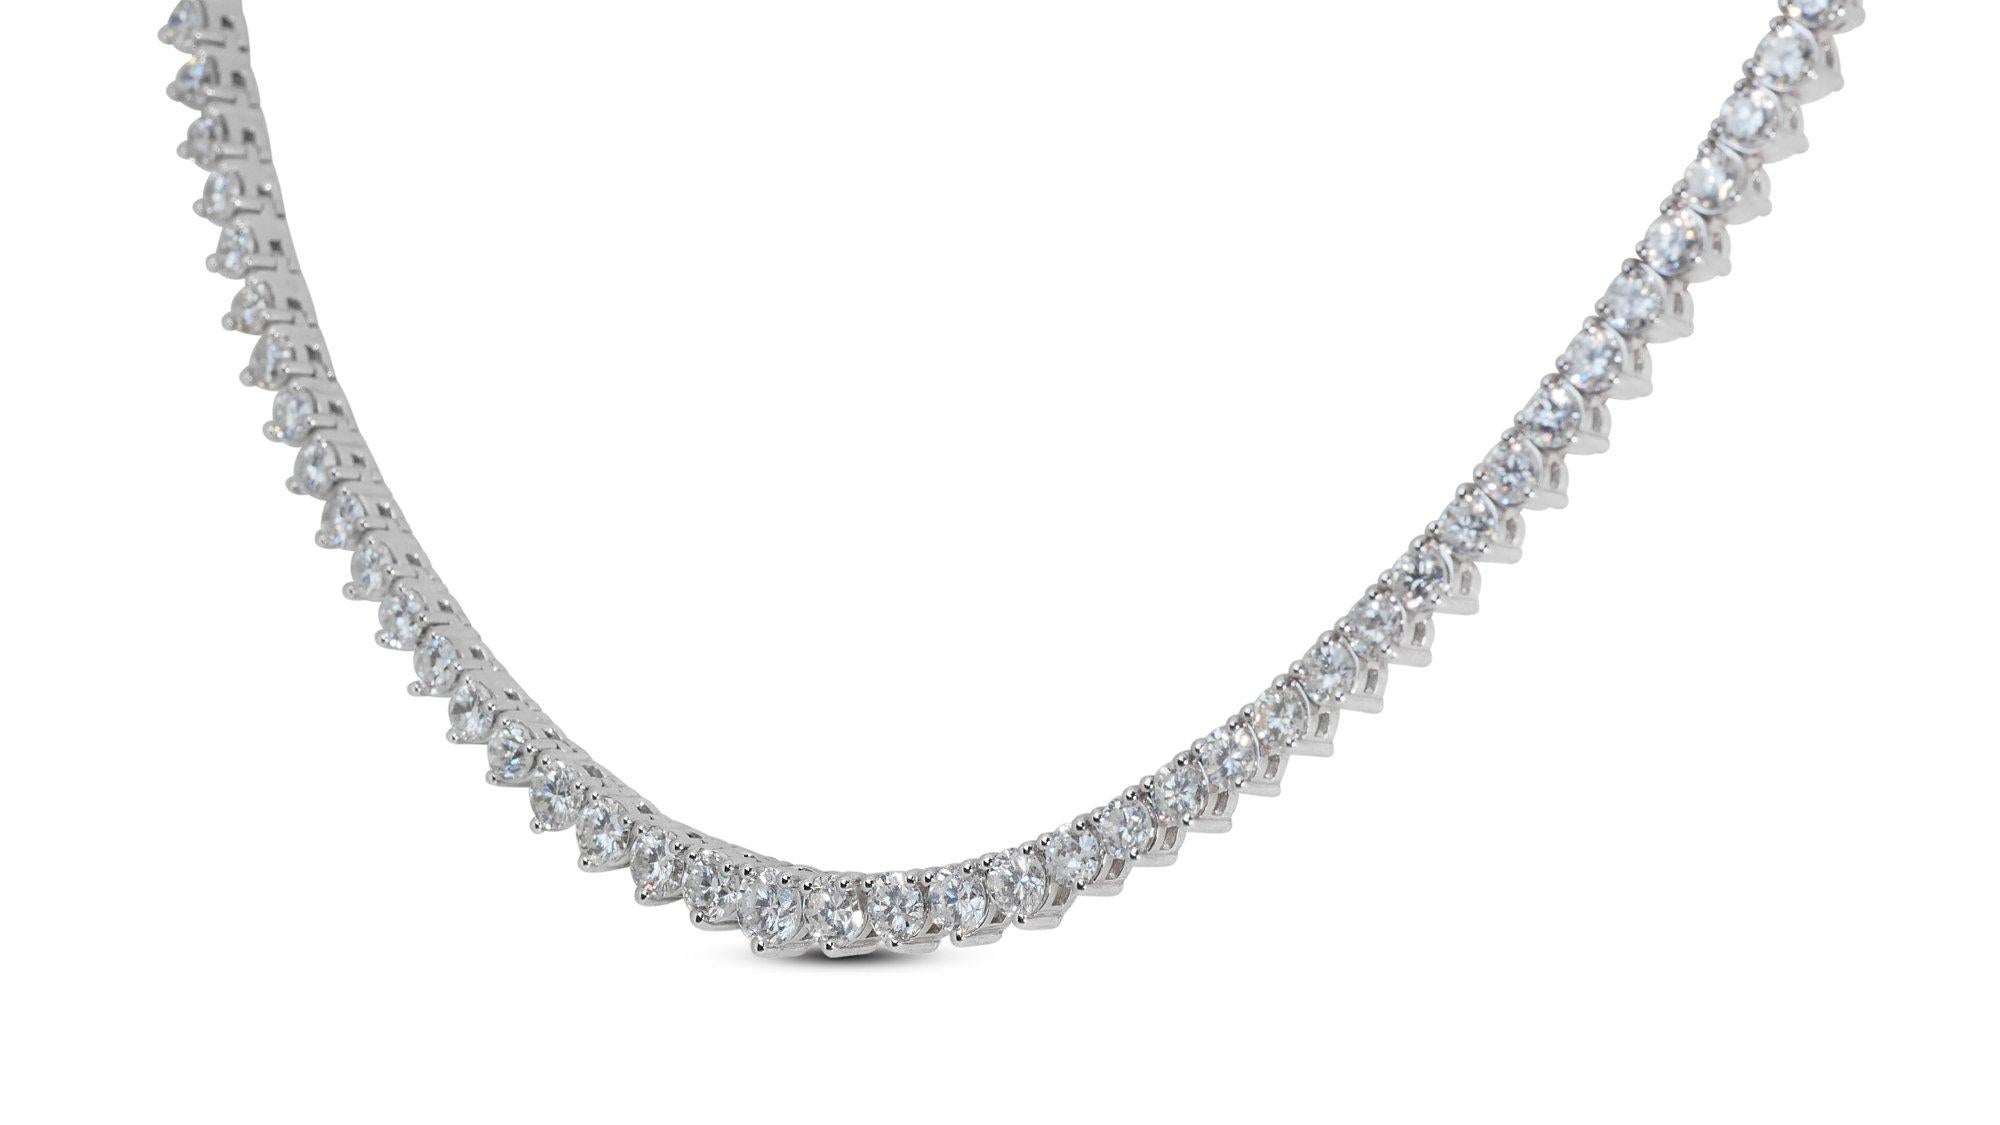 Ravishing 14k White Gold Necklace w/ 8.36 ct Natural Diamonds IGI Certificate For Sale 7